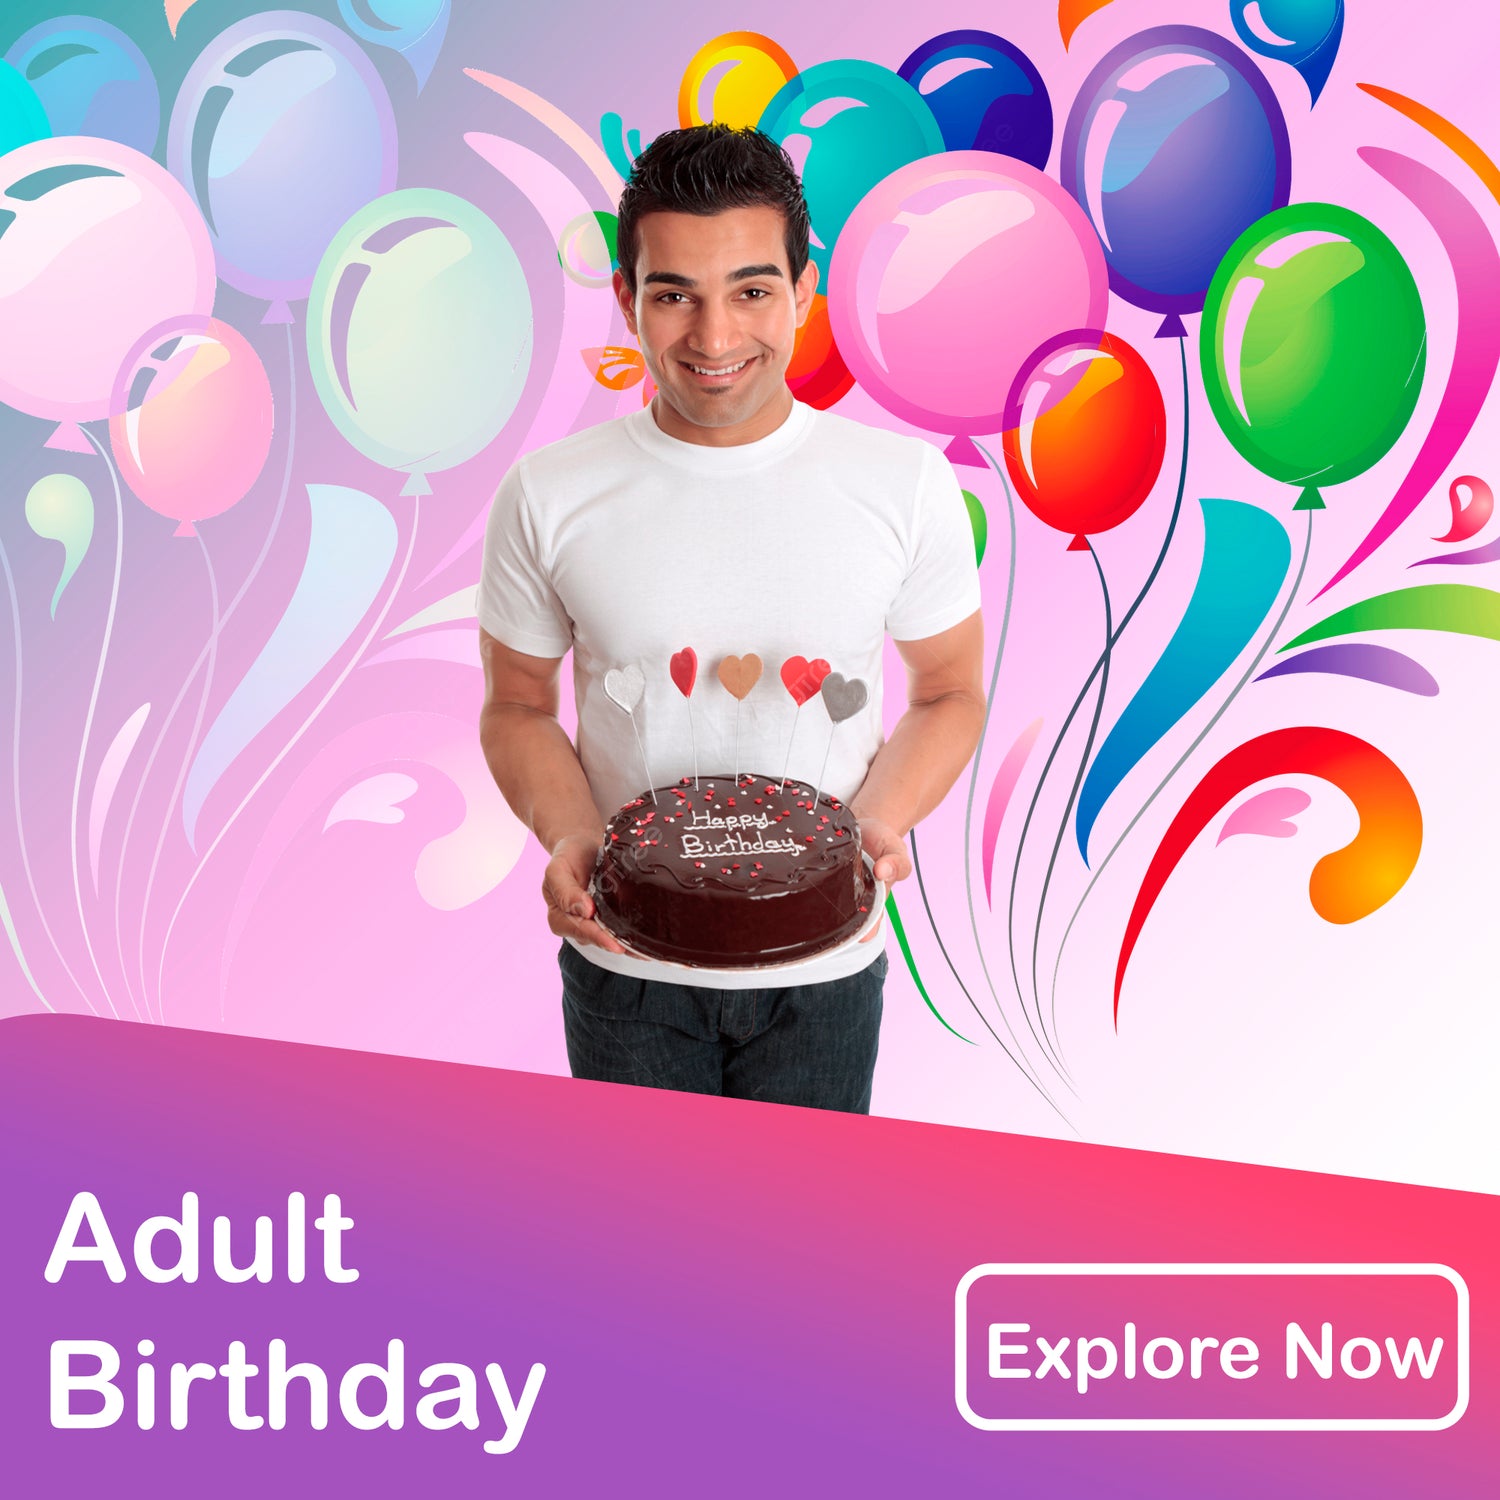 Adult Birthday